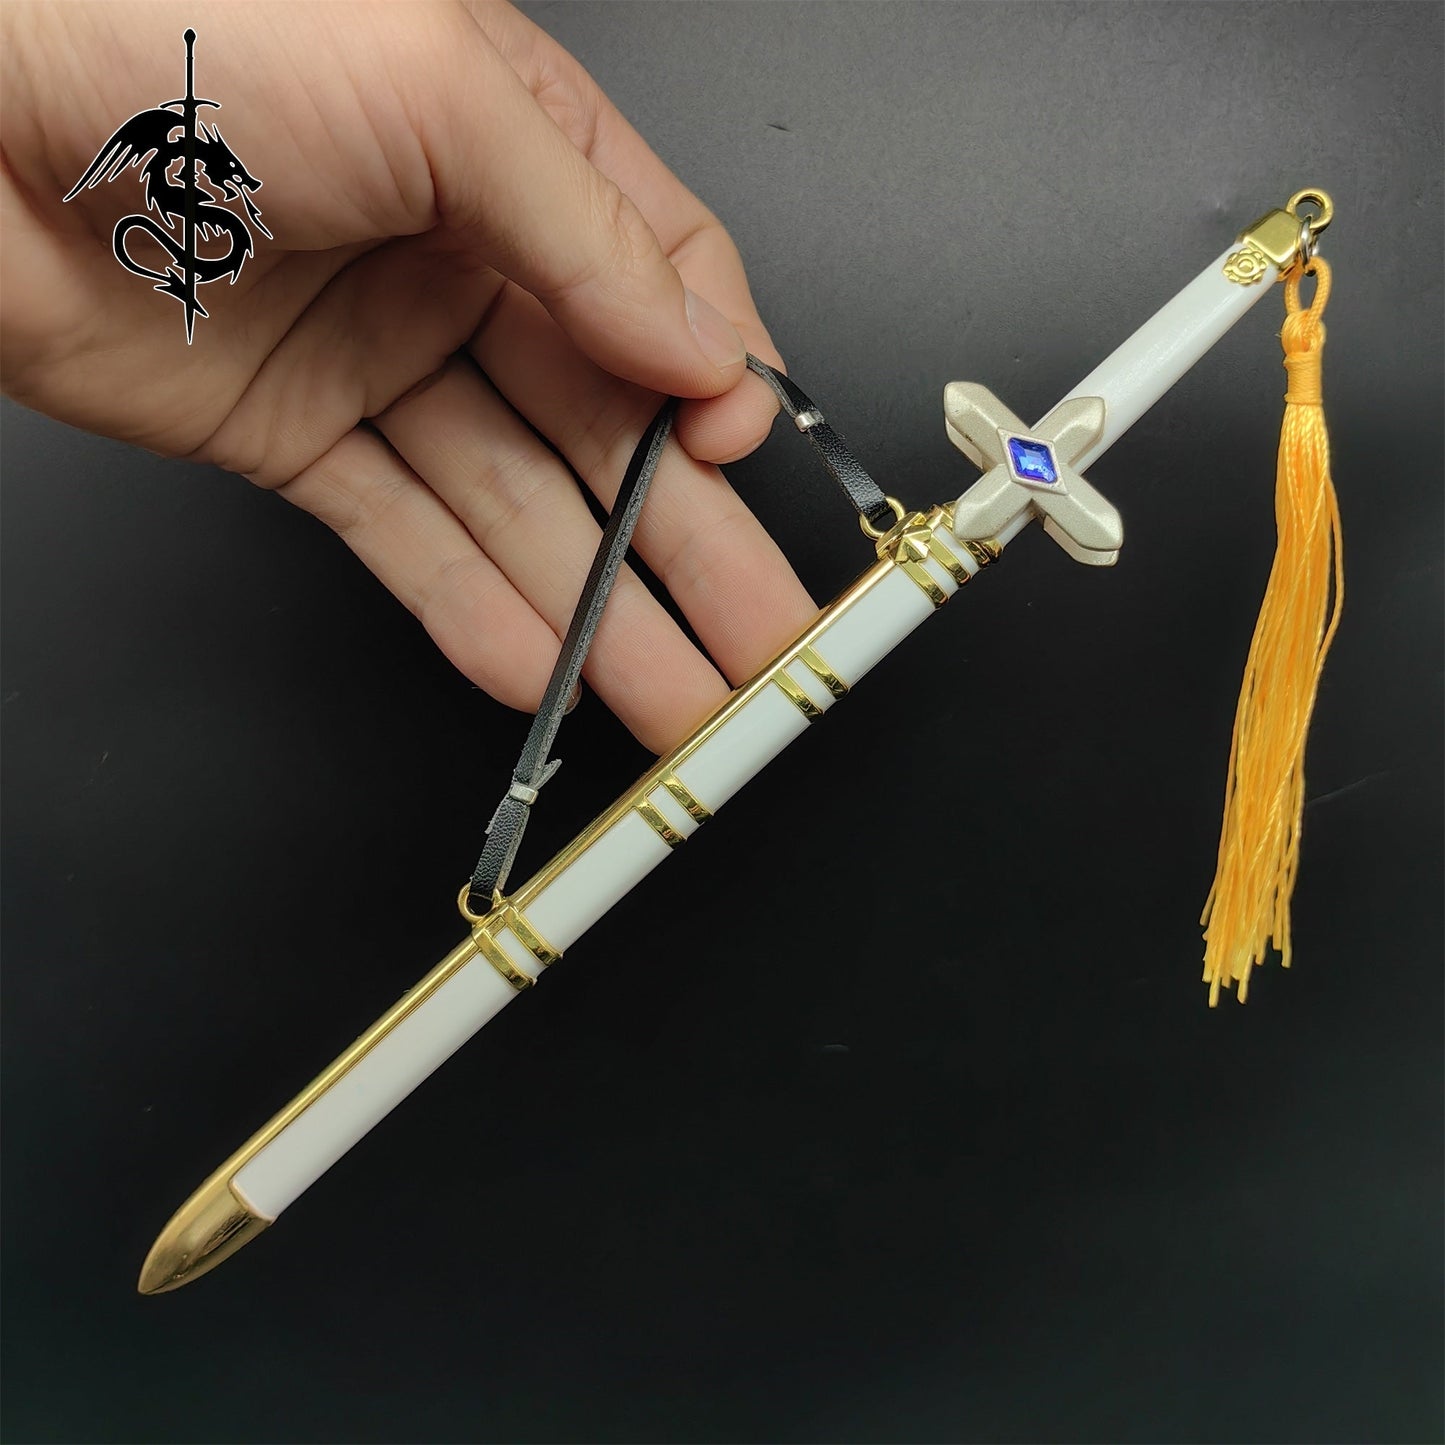 GreatBug Ailmation Claw Cloud Prince Sword Metal Replica